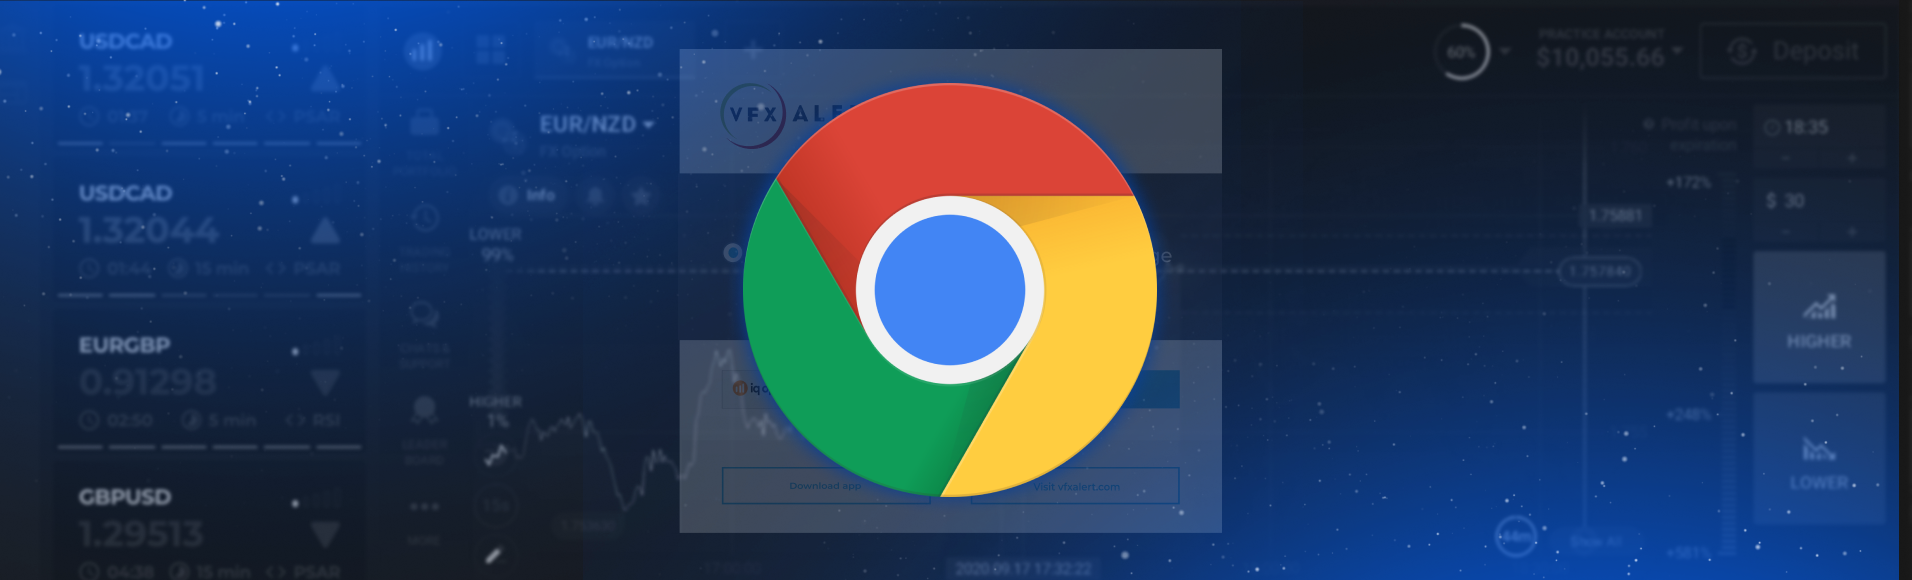 vfxAlert signals in browser Chrome